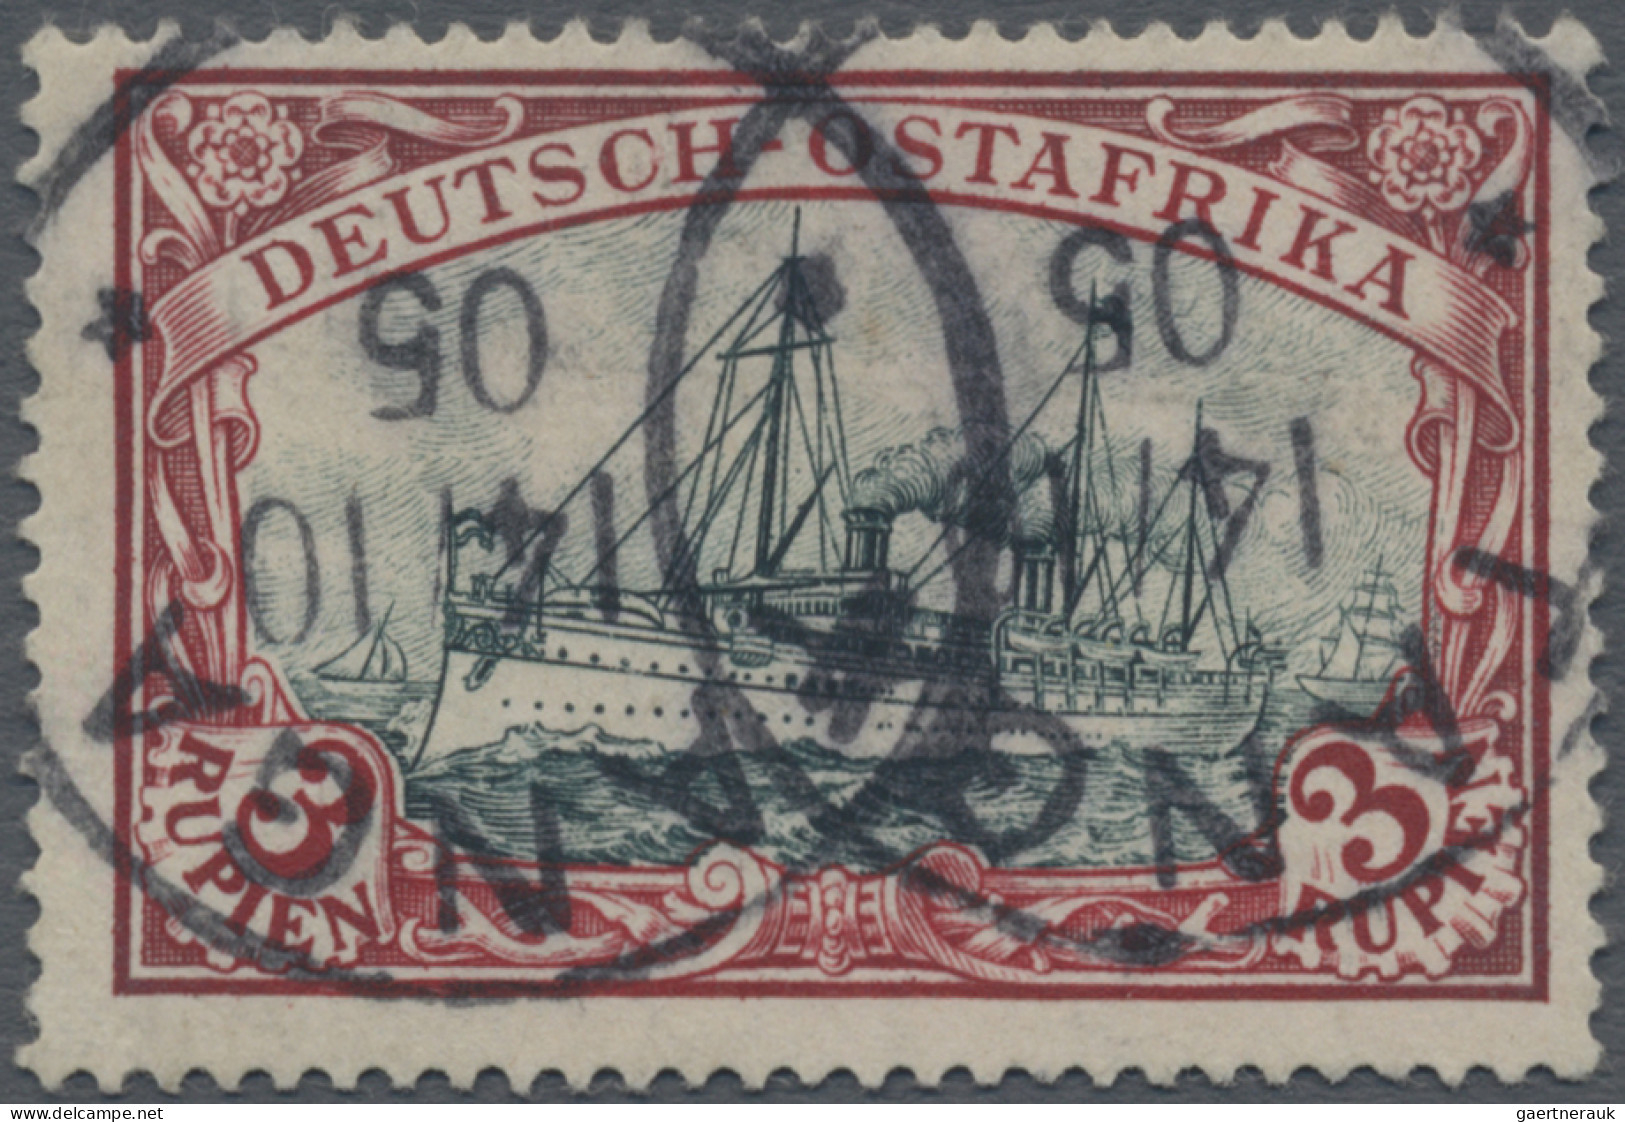 Deutsch-Ostafrika: 1901, Schiff, 3 R. Dunkelkarminrot/grünschwarz, Sauber Gestem - Afrique Orientale